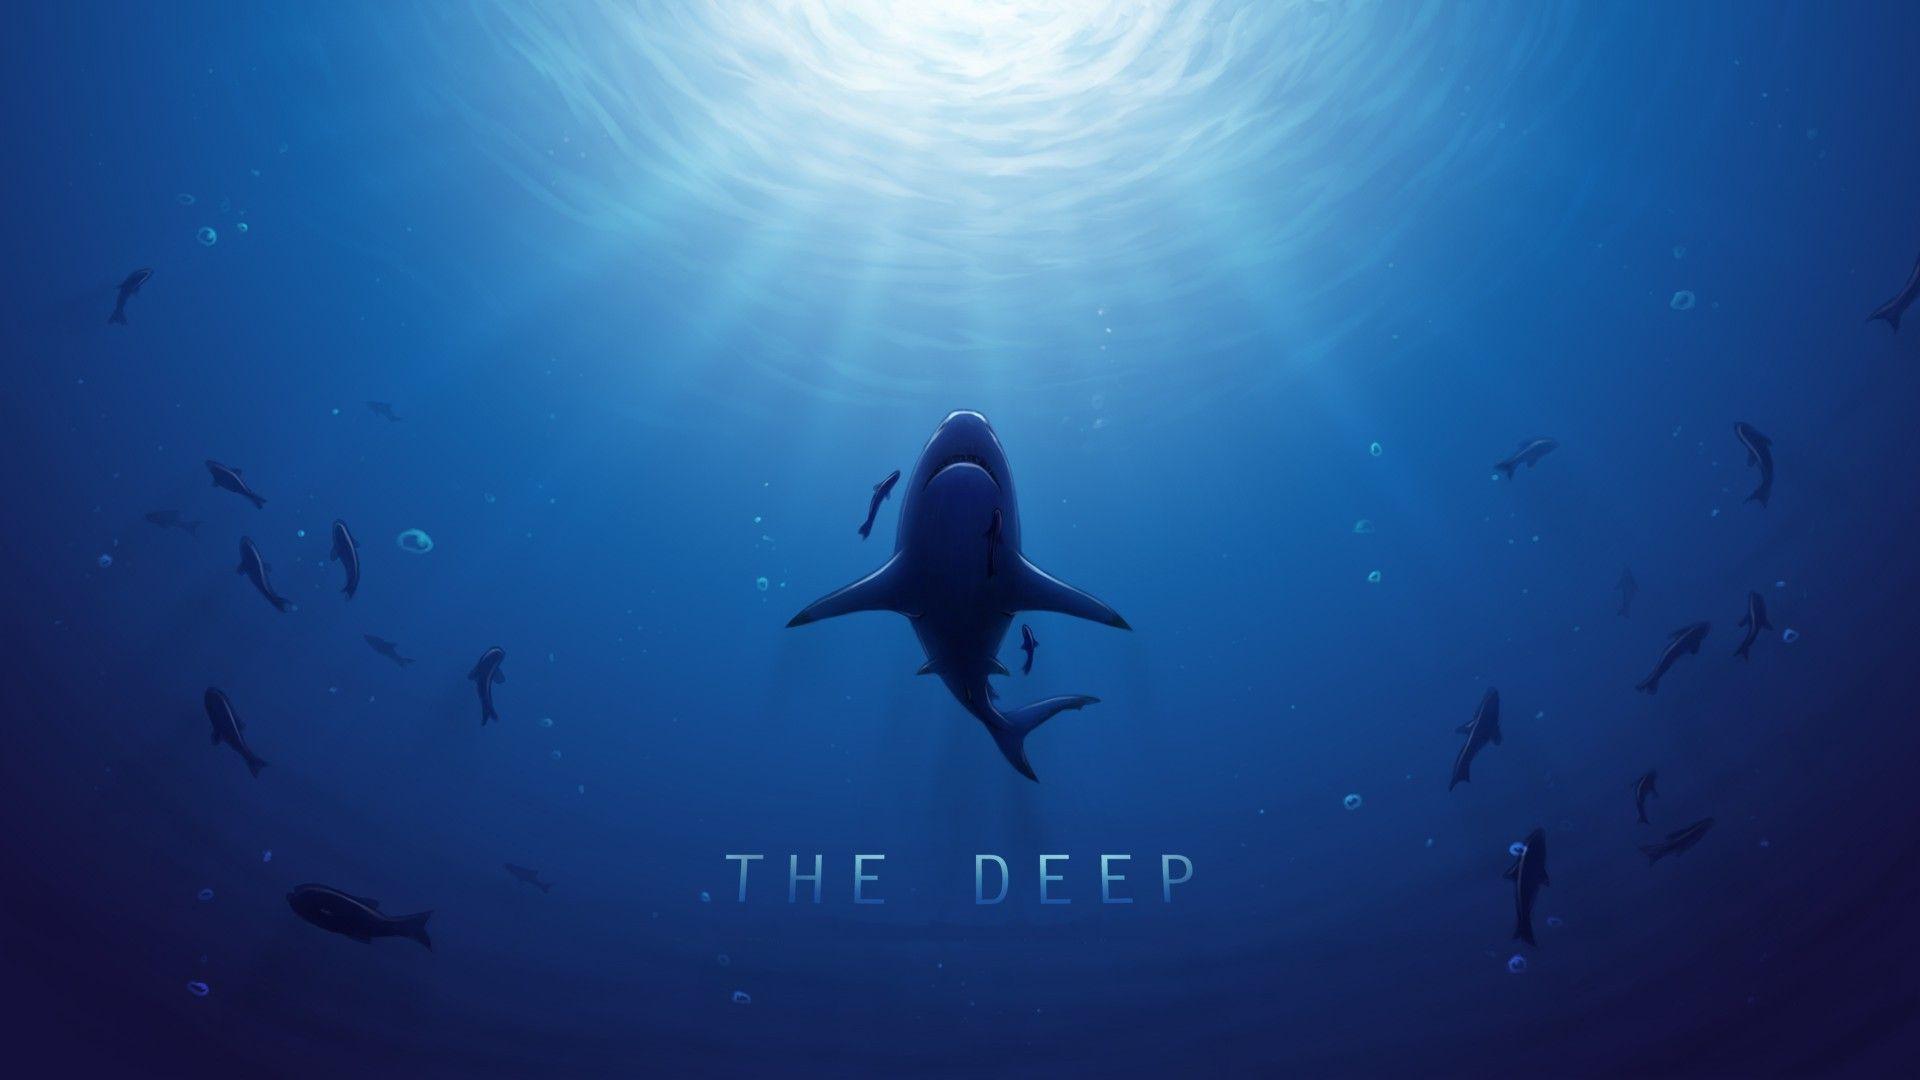 Deep Sea 4k Wallpapers Top Free Deep Sea 4k Backgrounds Wallpaperaccess